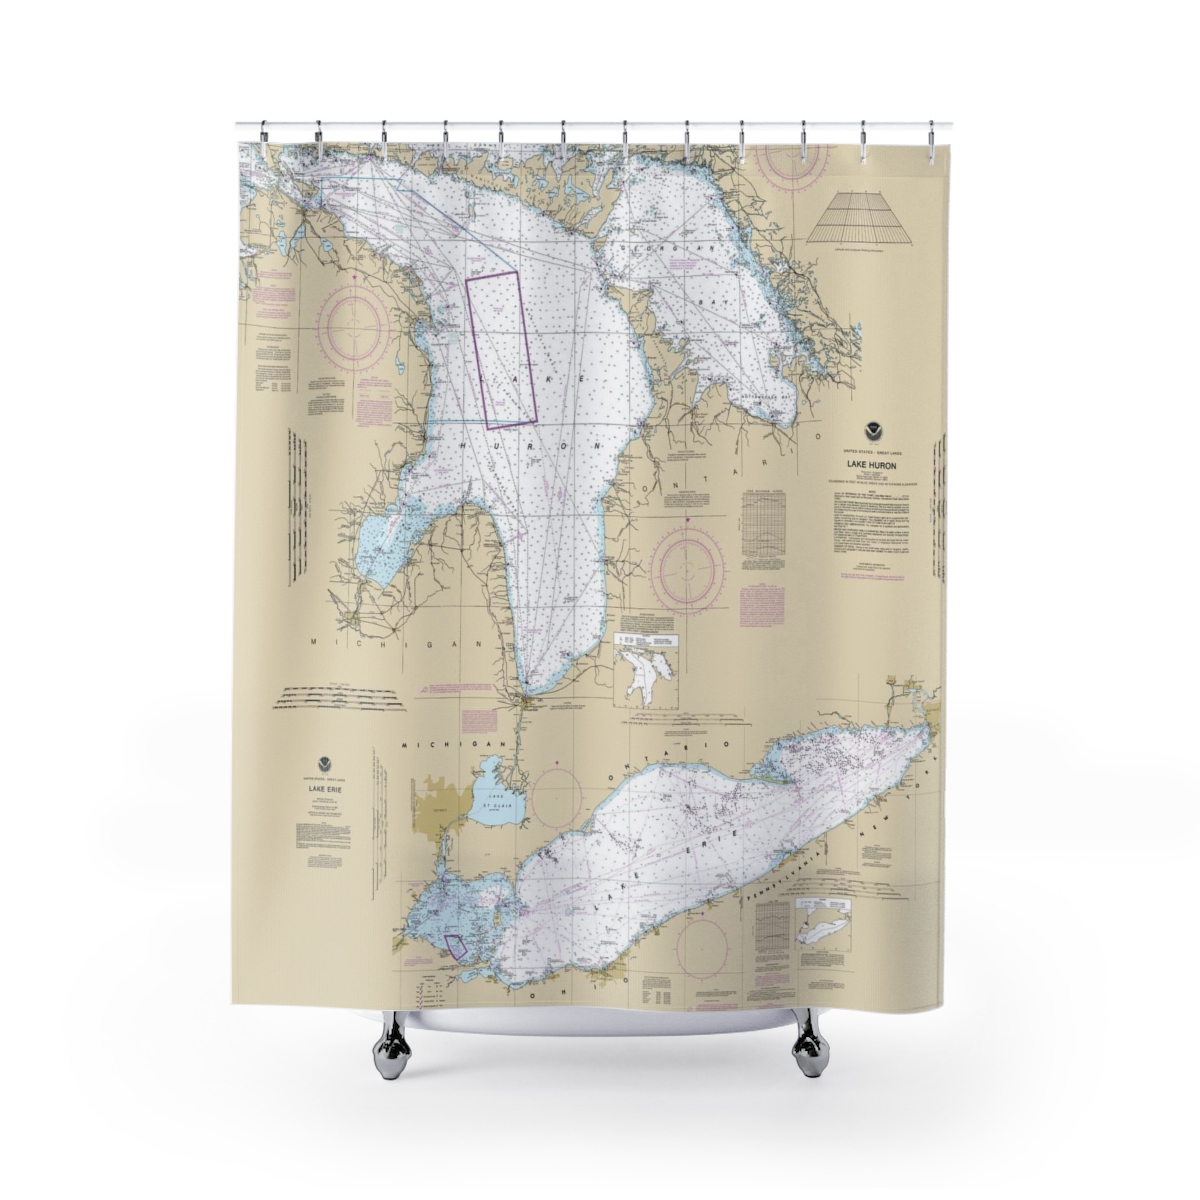 Lake Erie Chart